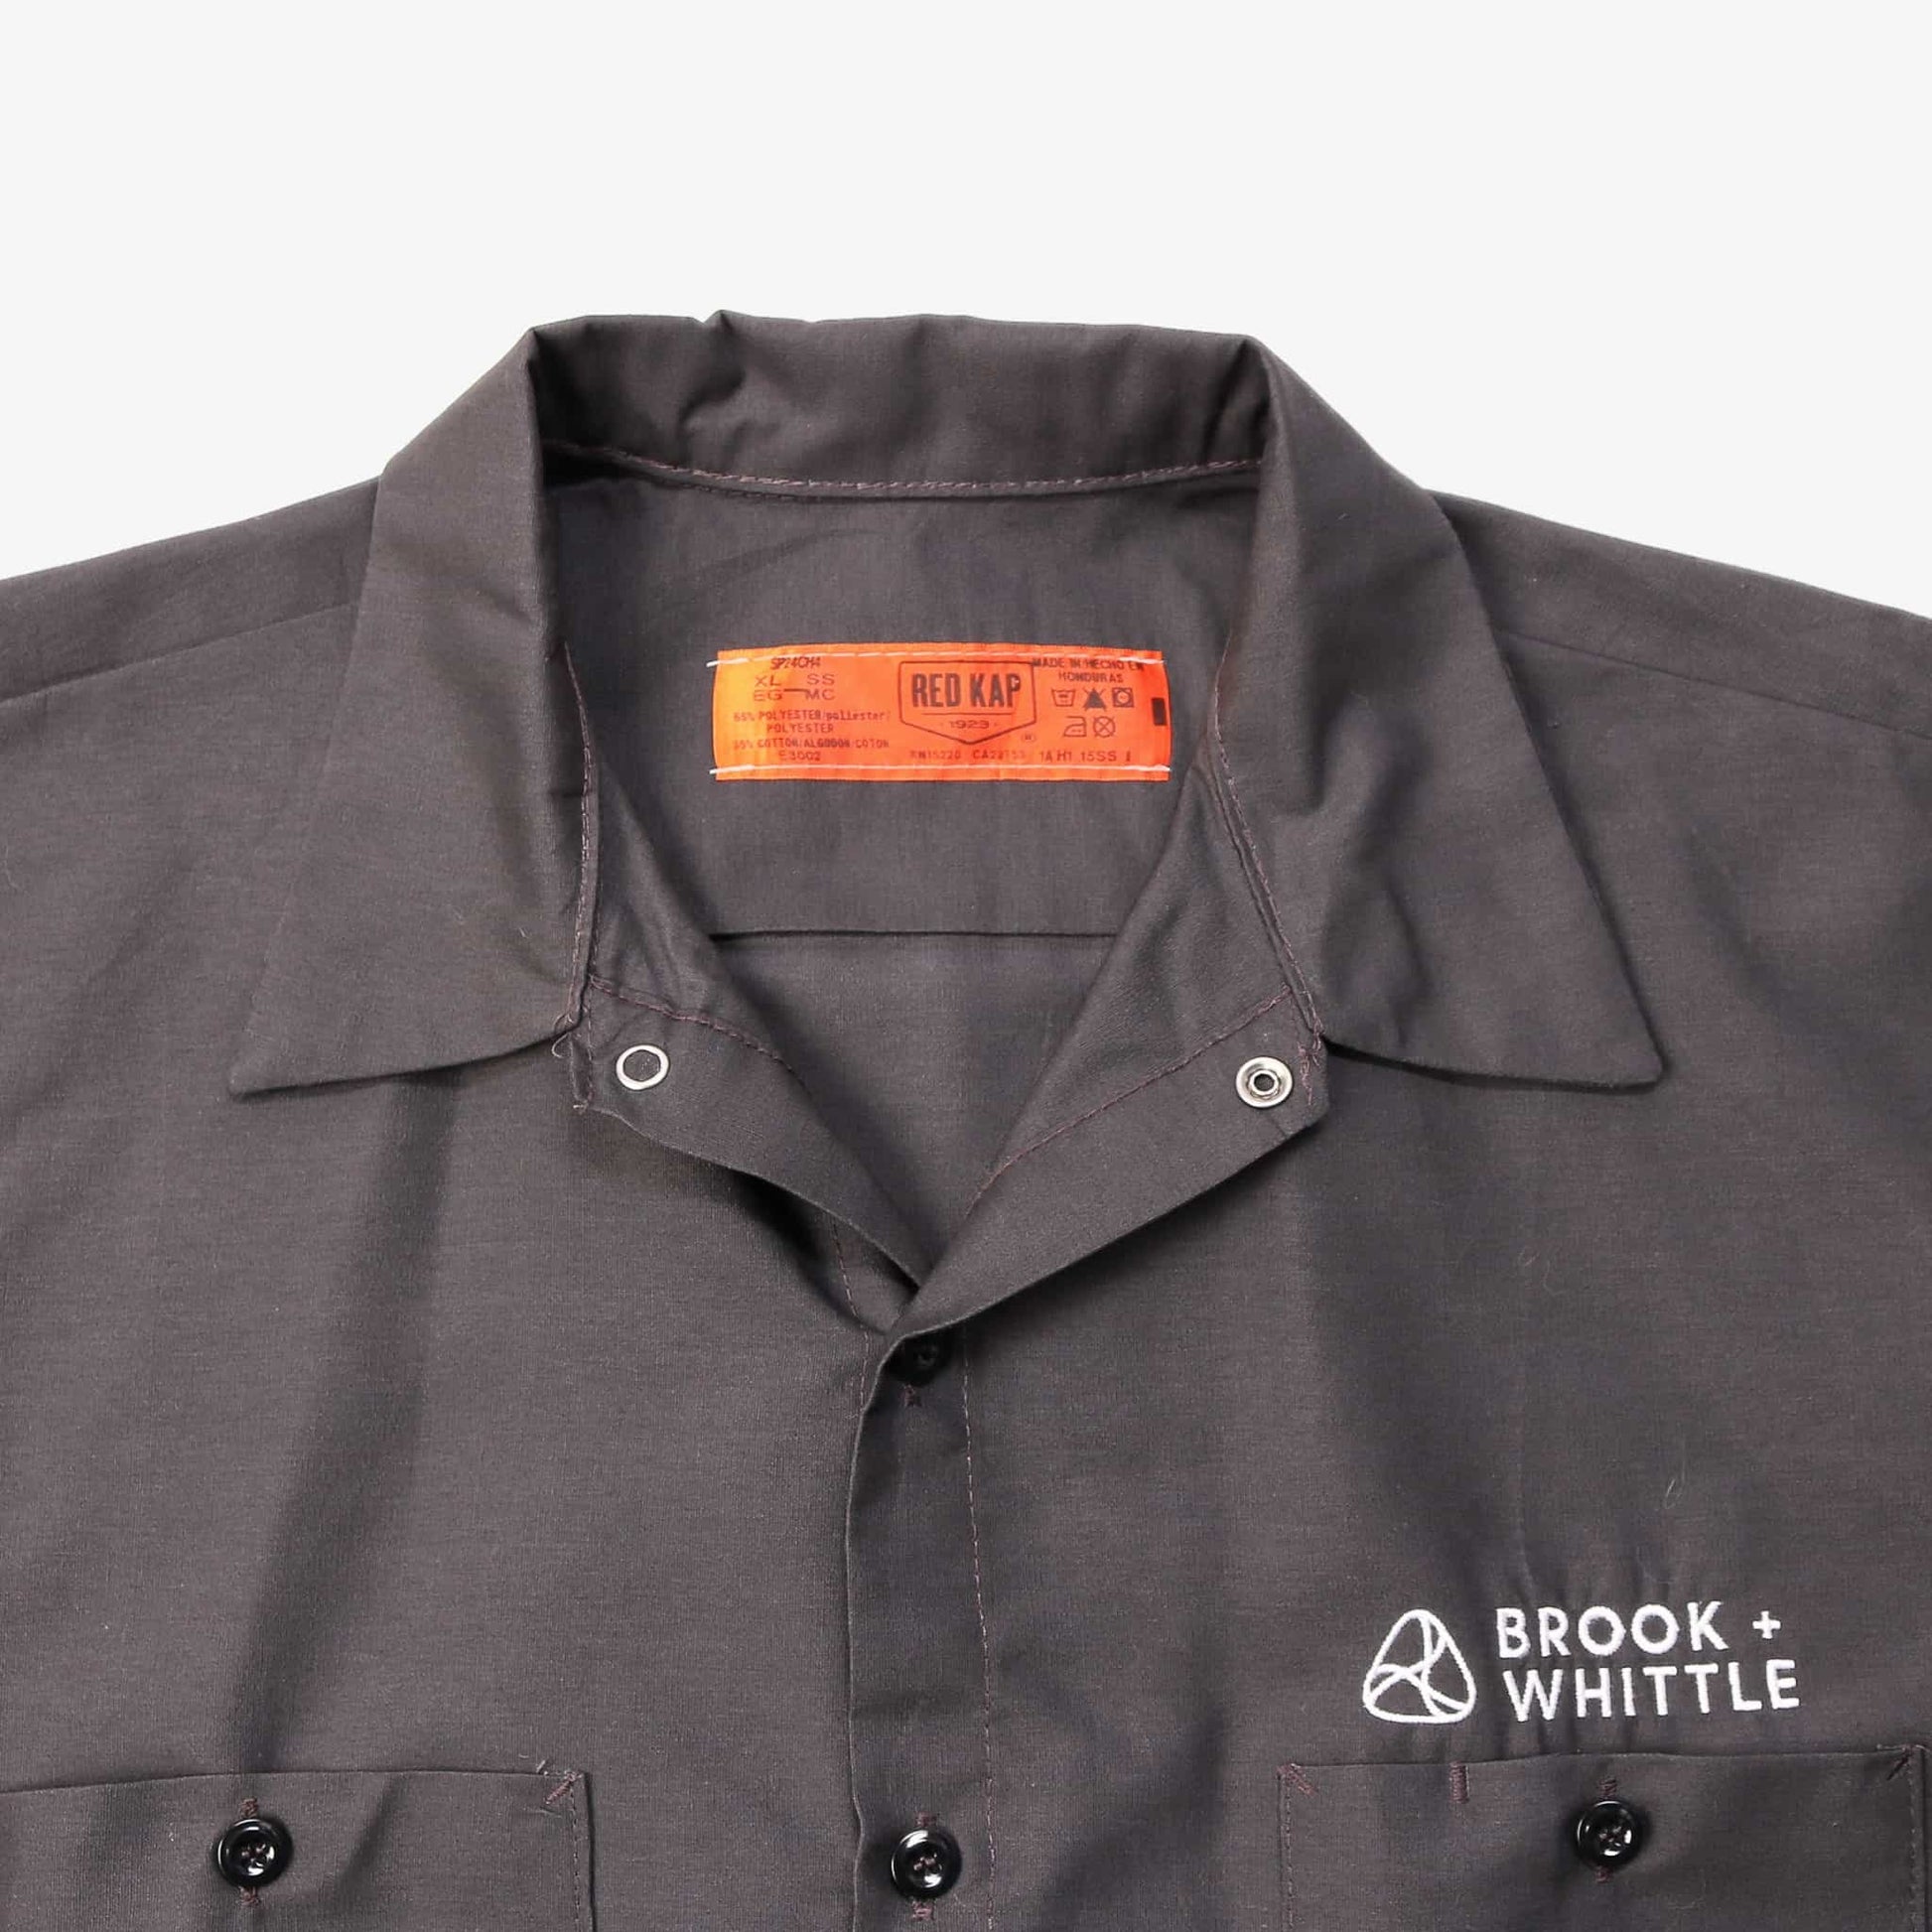 'Brook+Whittle' Garage Work Shirt - American Madness